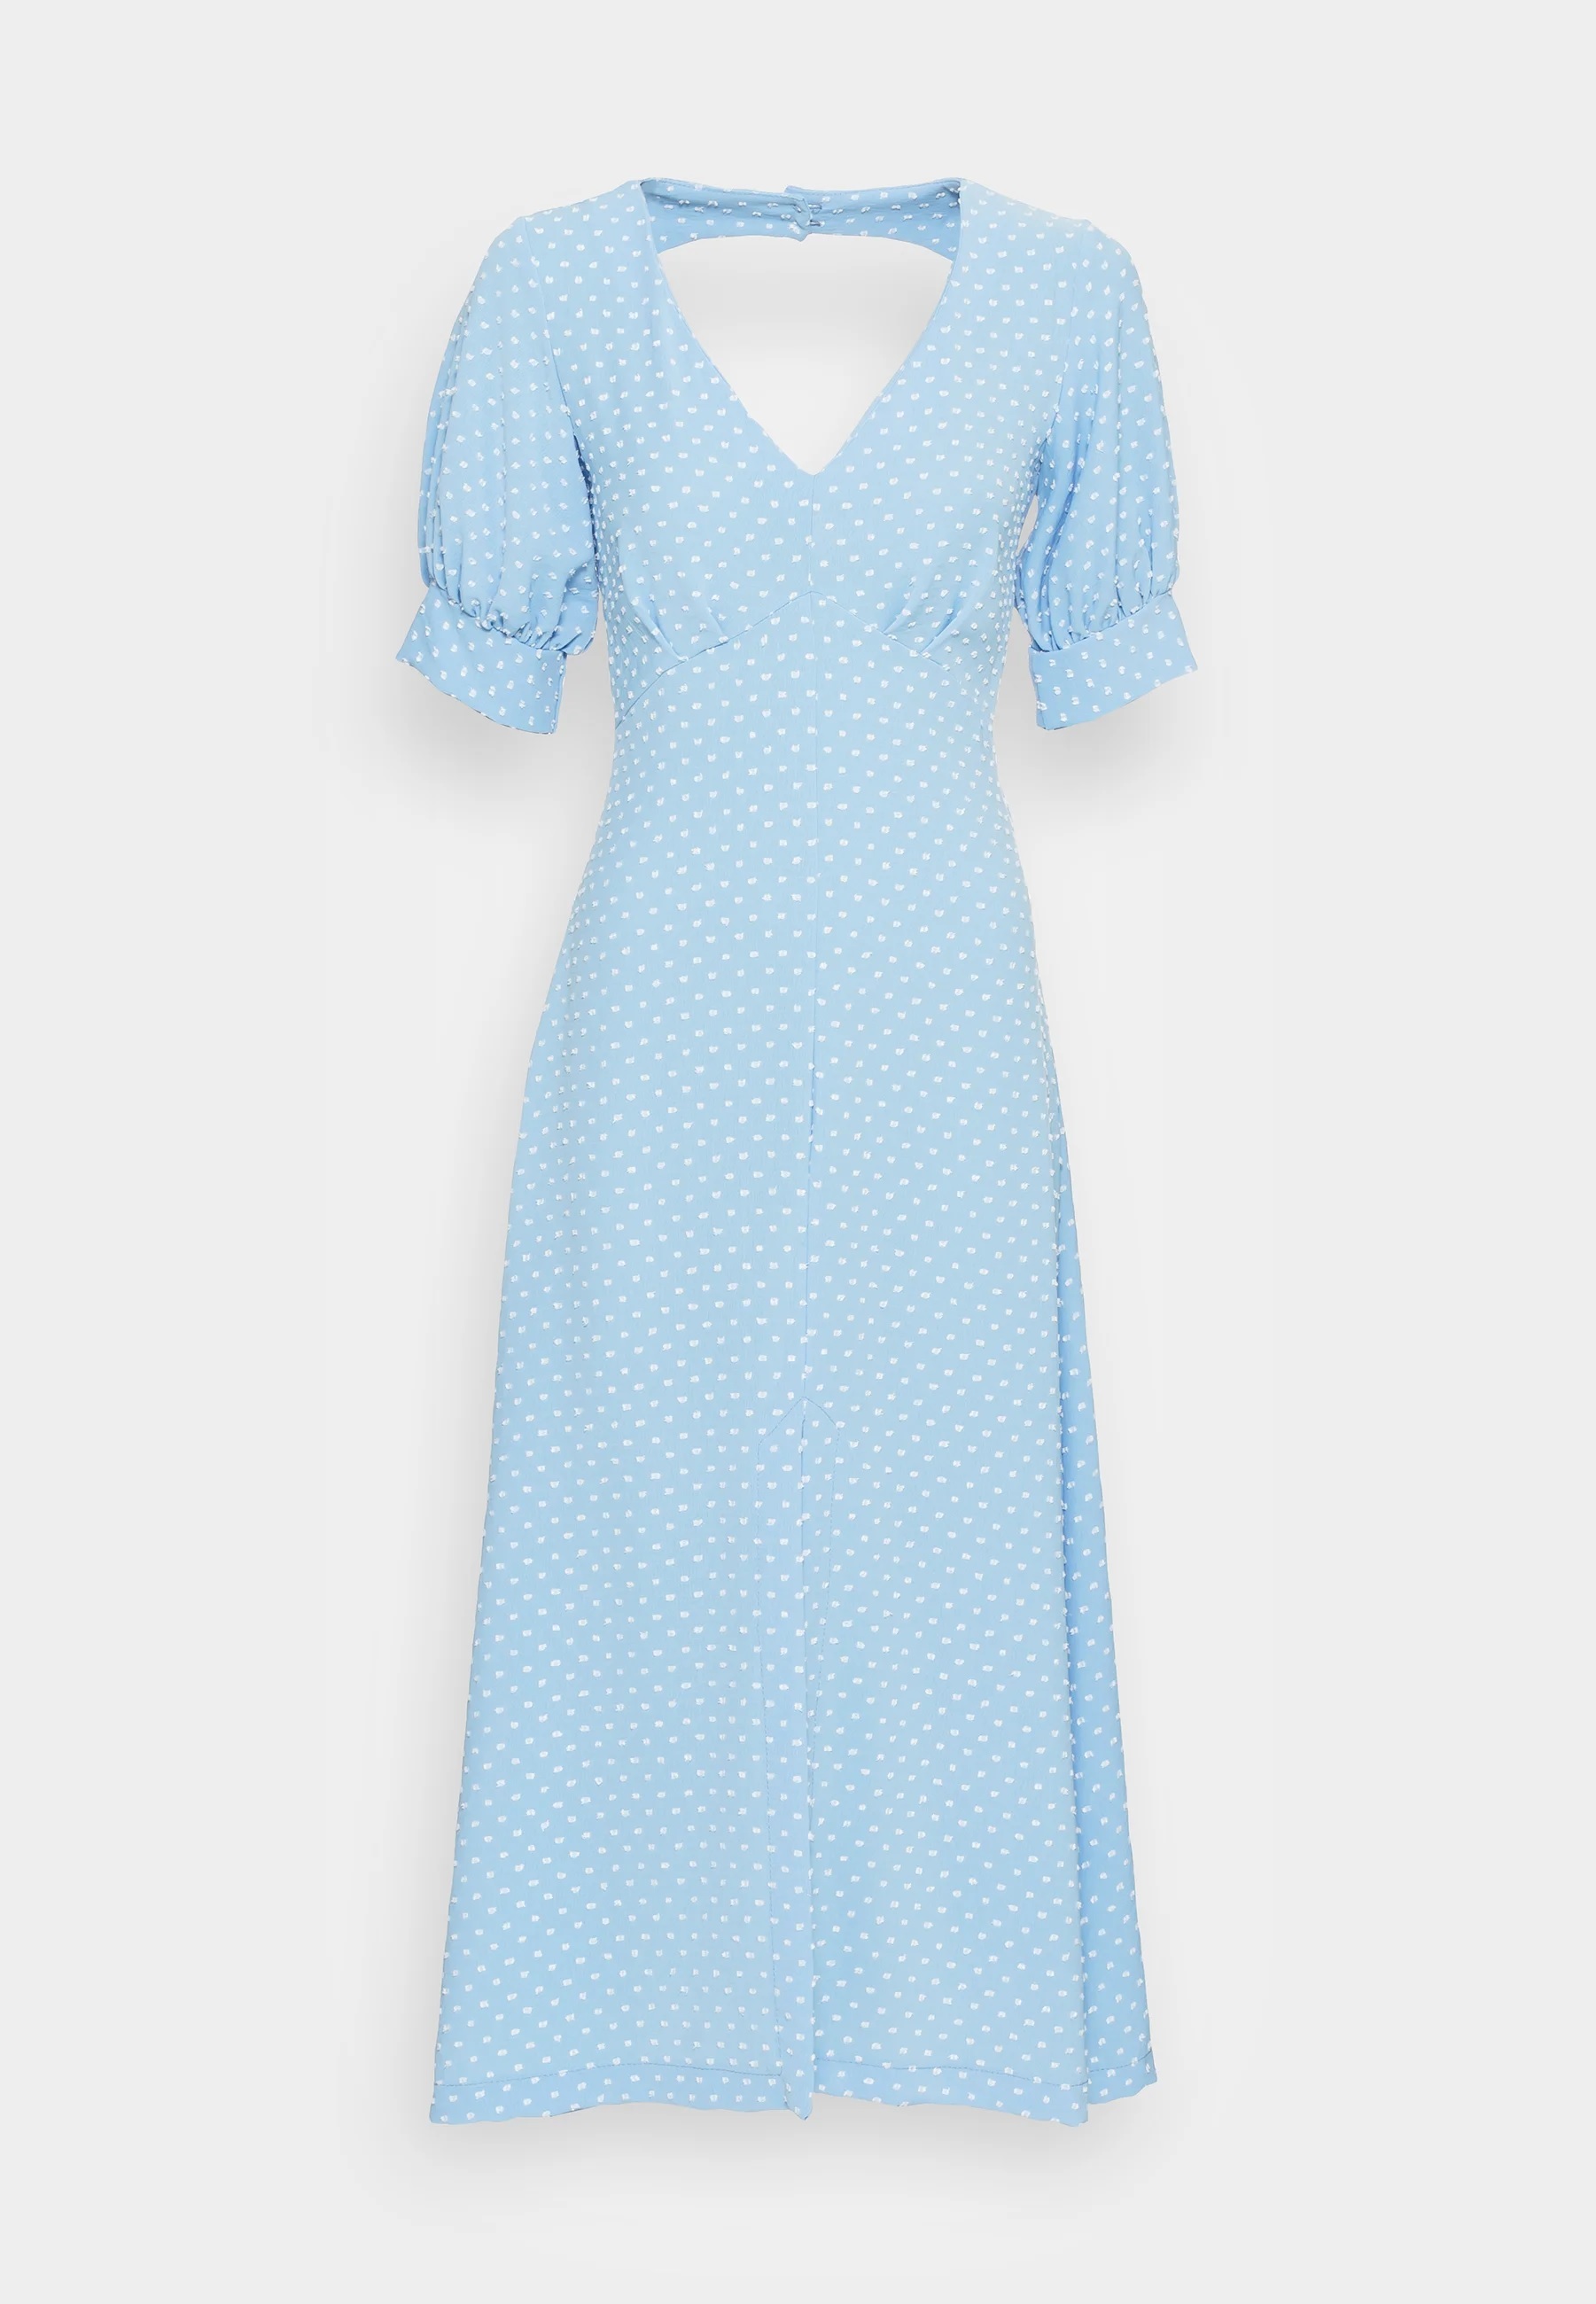 Vestido azul celeste con lunares blancos. Closet, de venta en Zalando (109,95 euros).